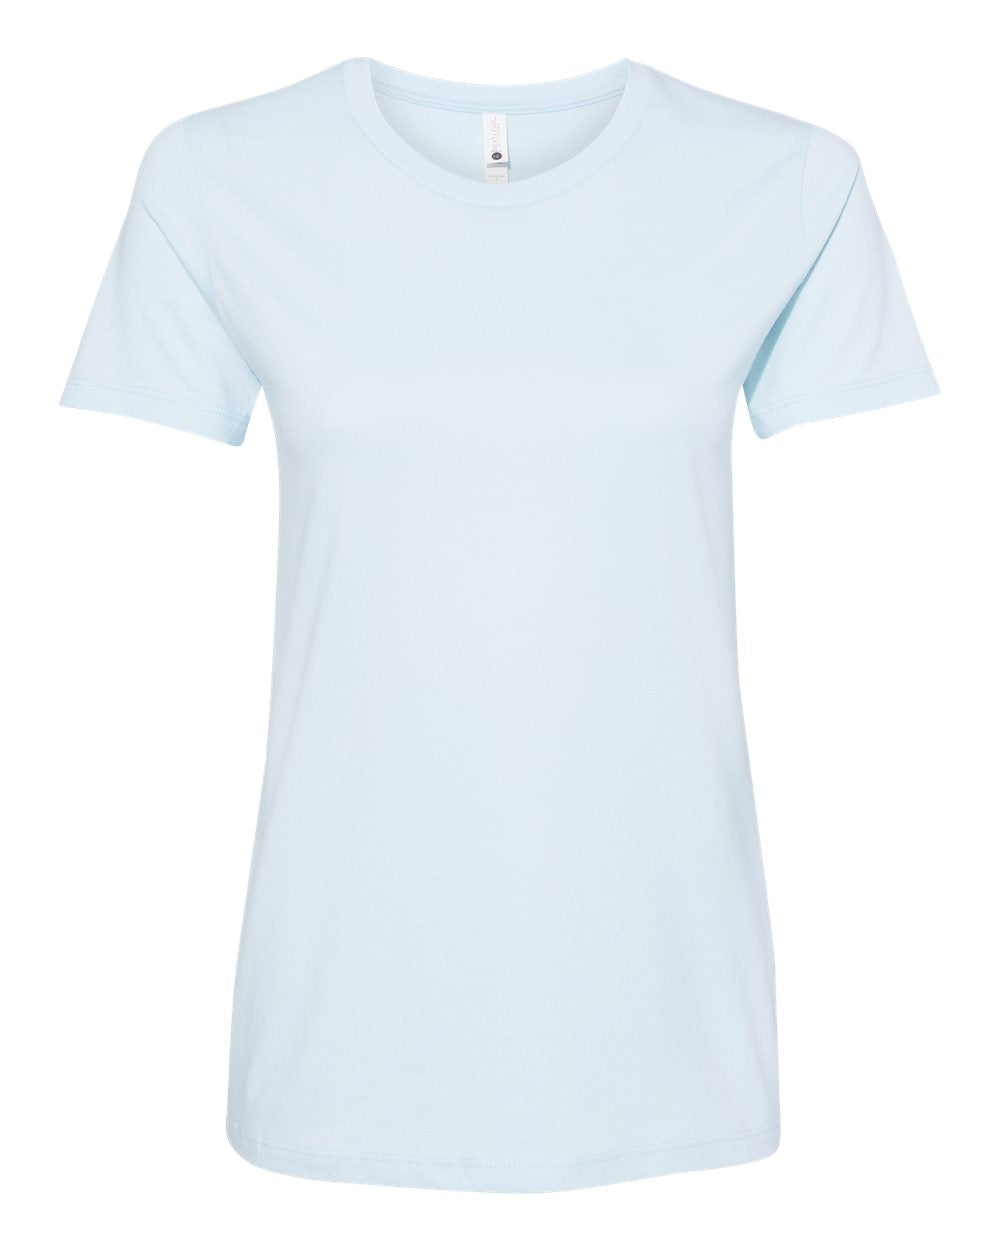 Next Level 3900 - Women's Cotton T-Shirt